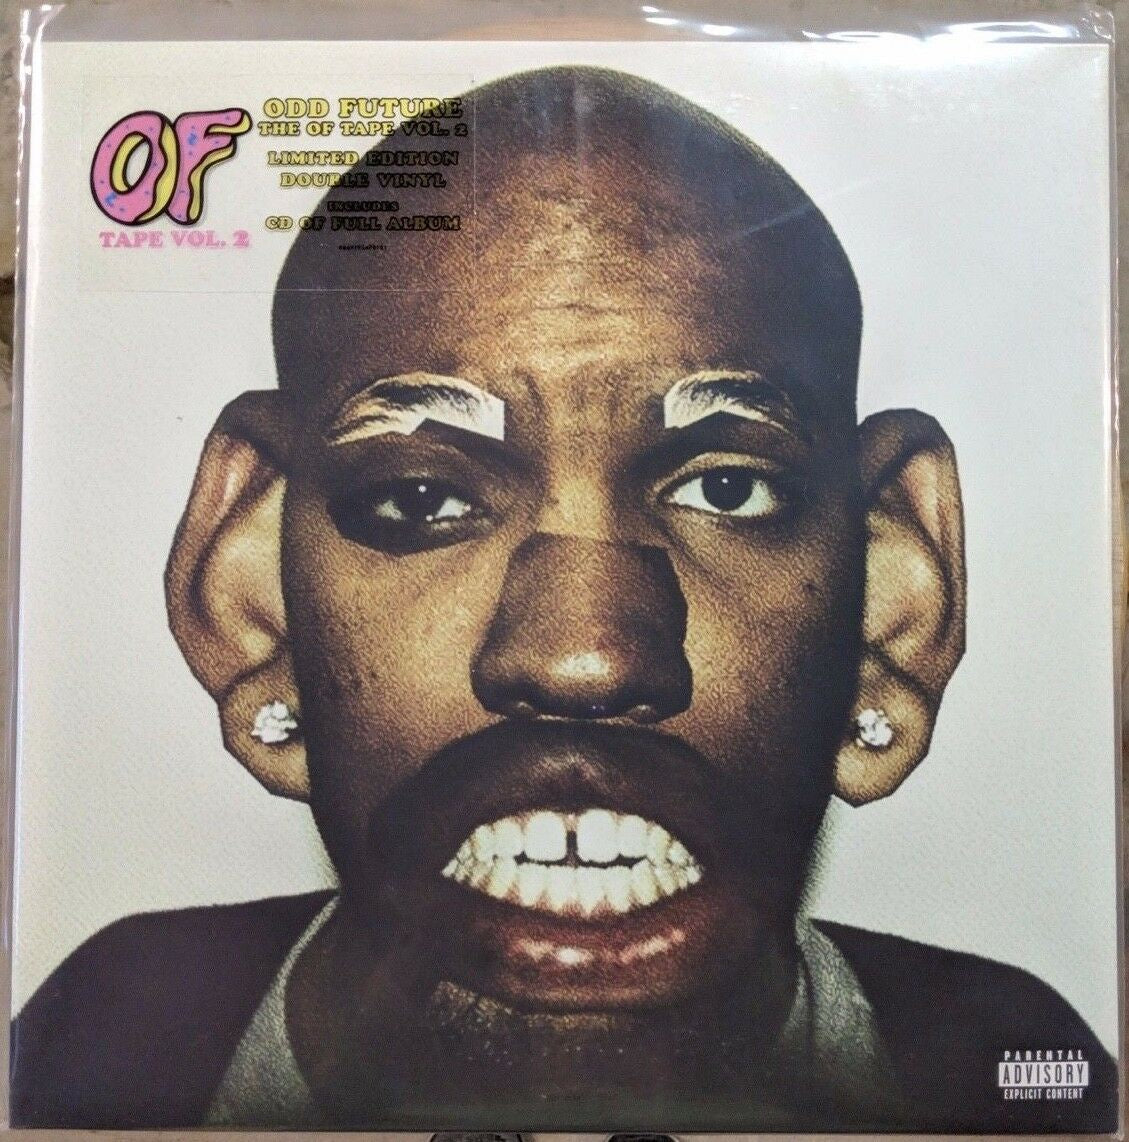 Odd Future – The OF Tape Vol. 2 - New 2 LP Record 2012 Odd Future USA Vinyl & CD - Hip Hop / Hardcore Hip-Hop